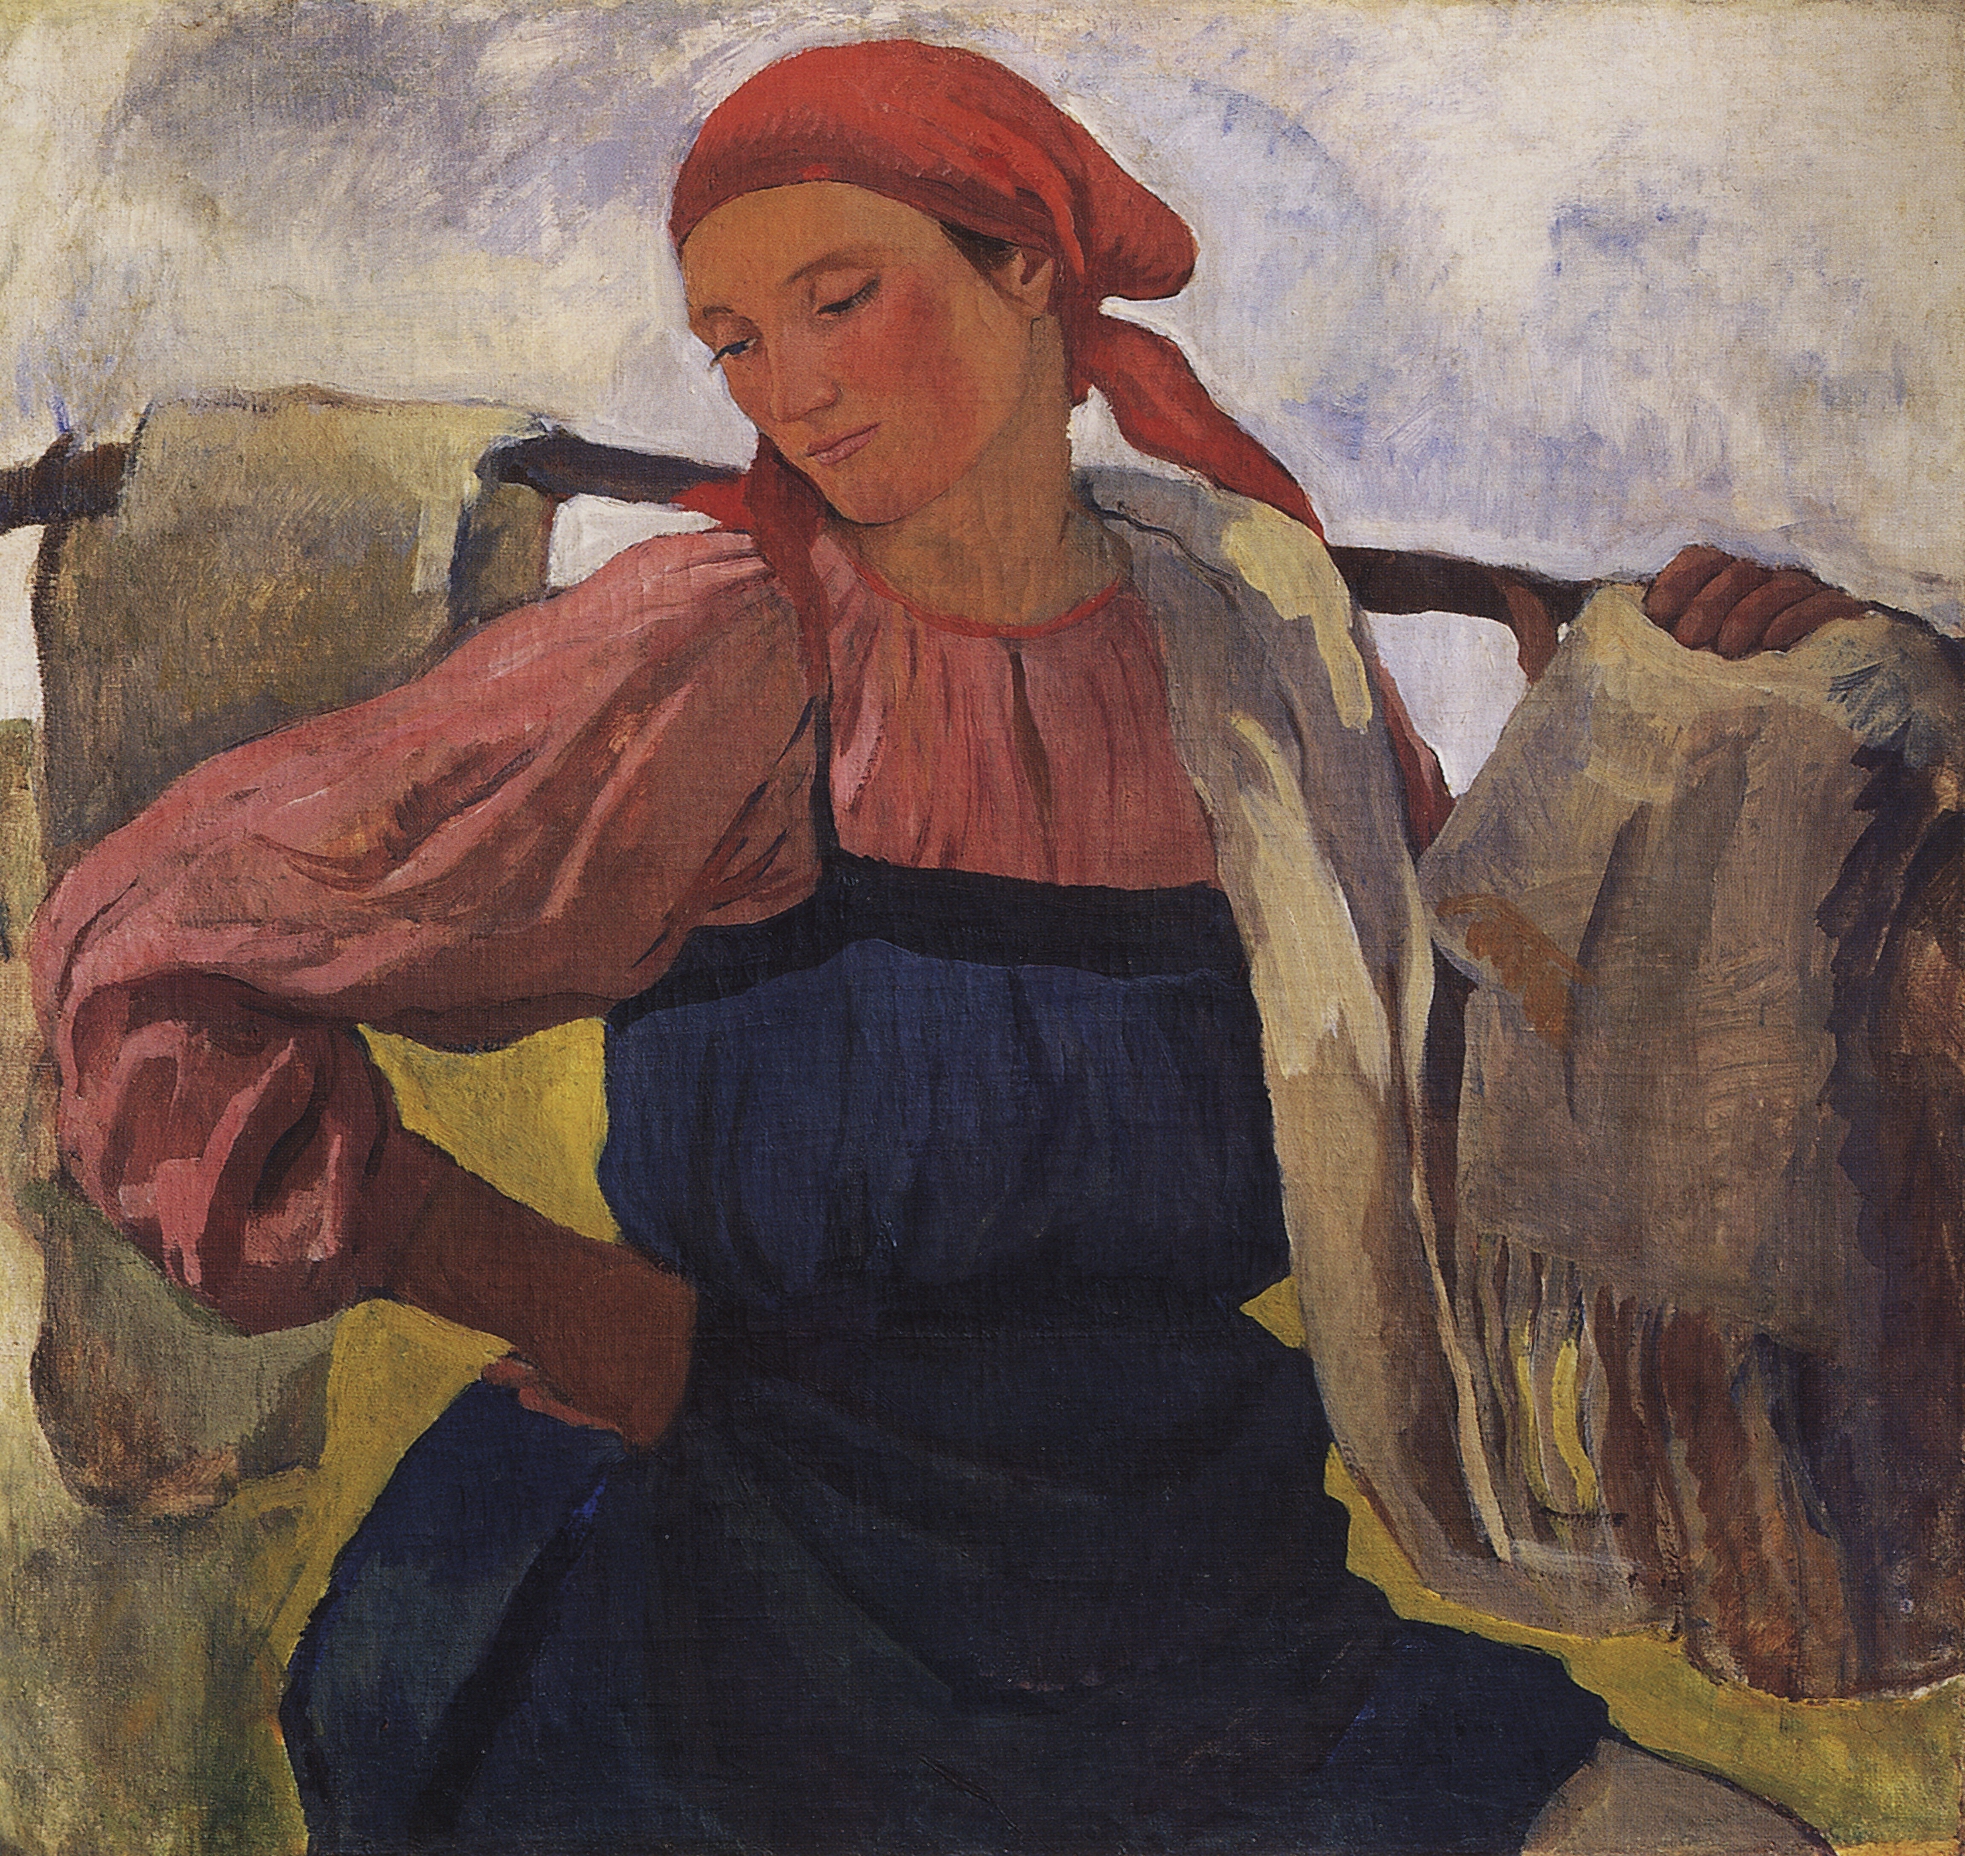 A Woman with the Canvas on the Yoke by Zinaida Serebriakova - 1917 State Russian Museum